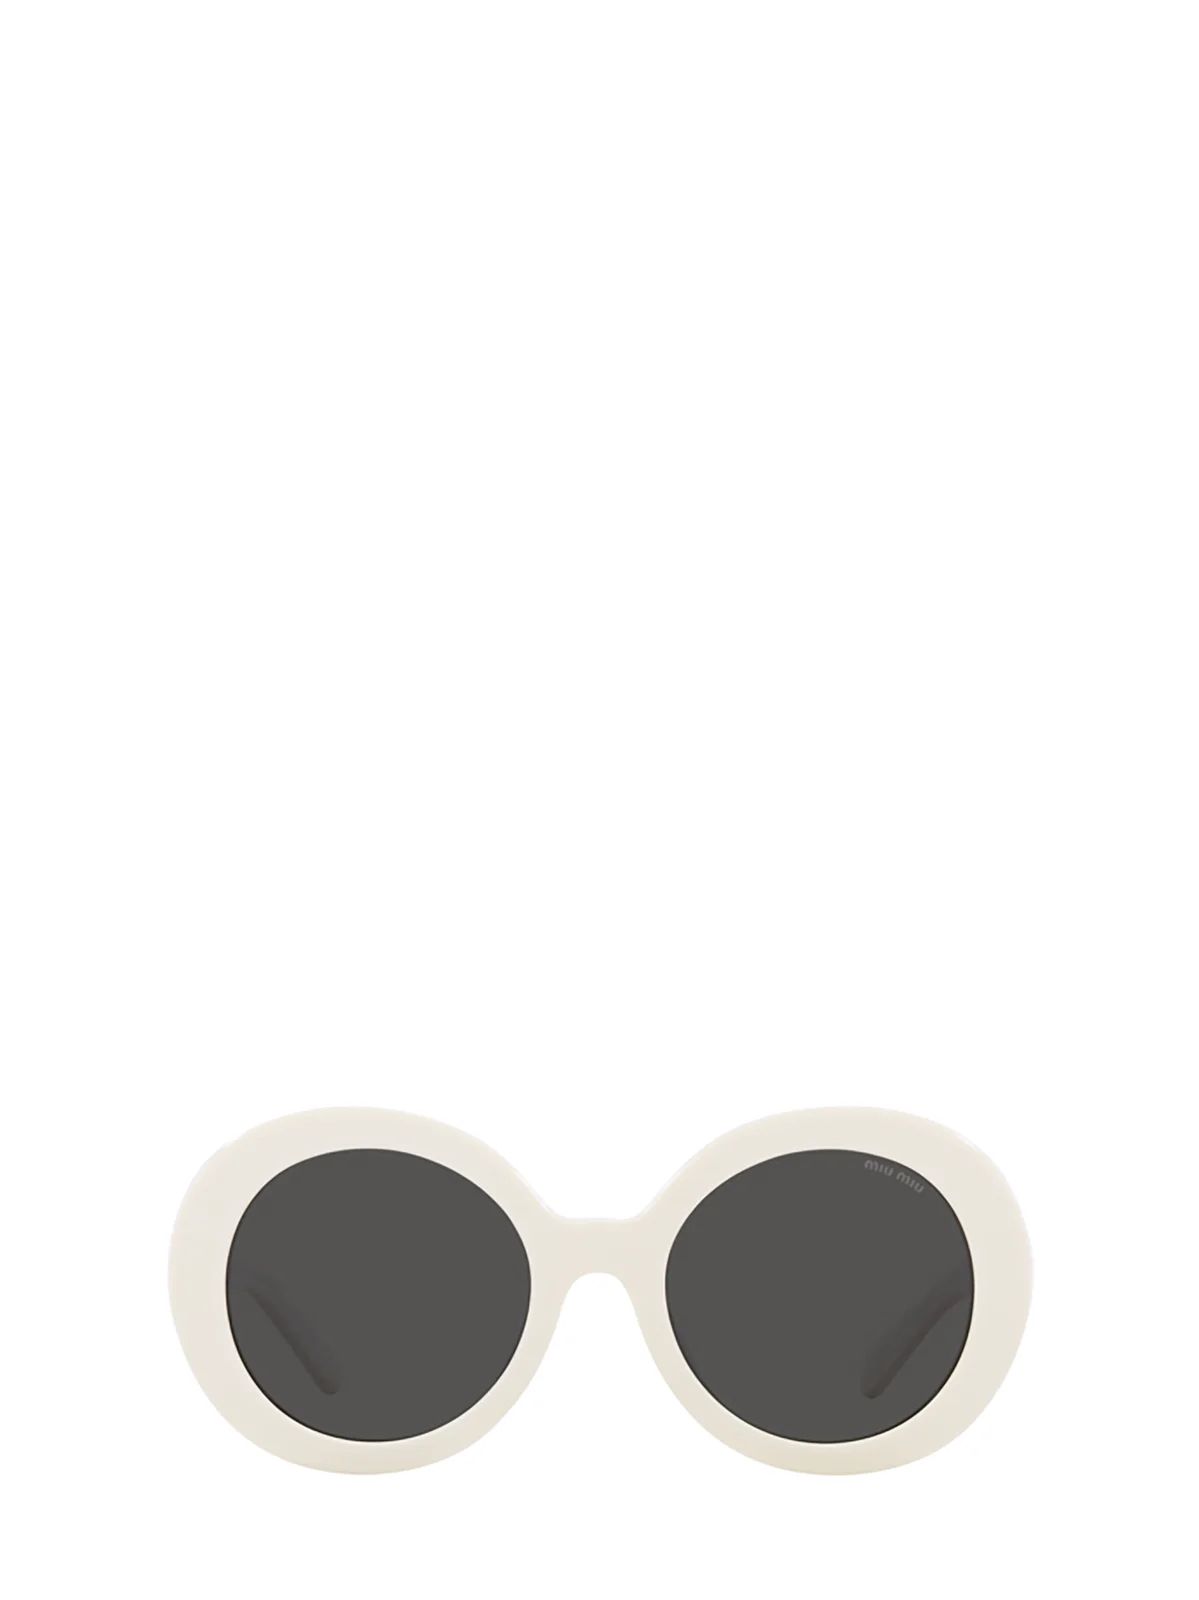 Miu Miu Eyewear Round-Frame Sunglasses | Cettire Global